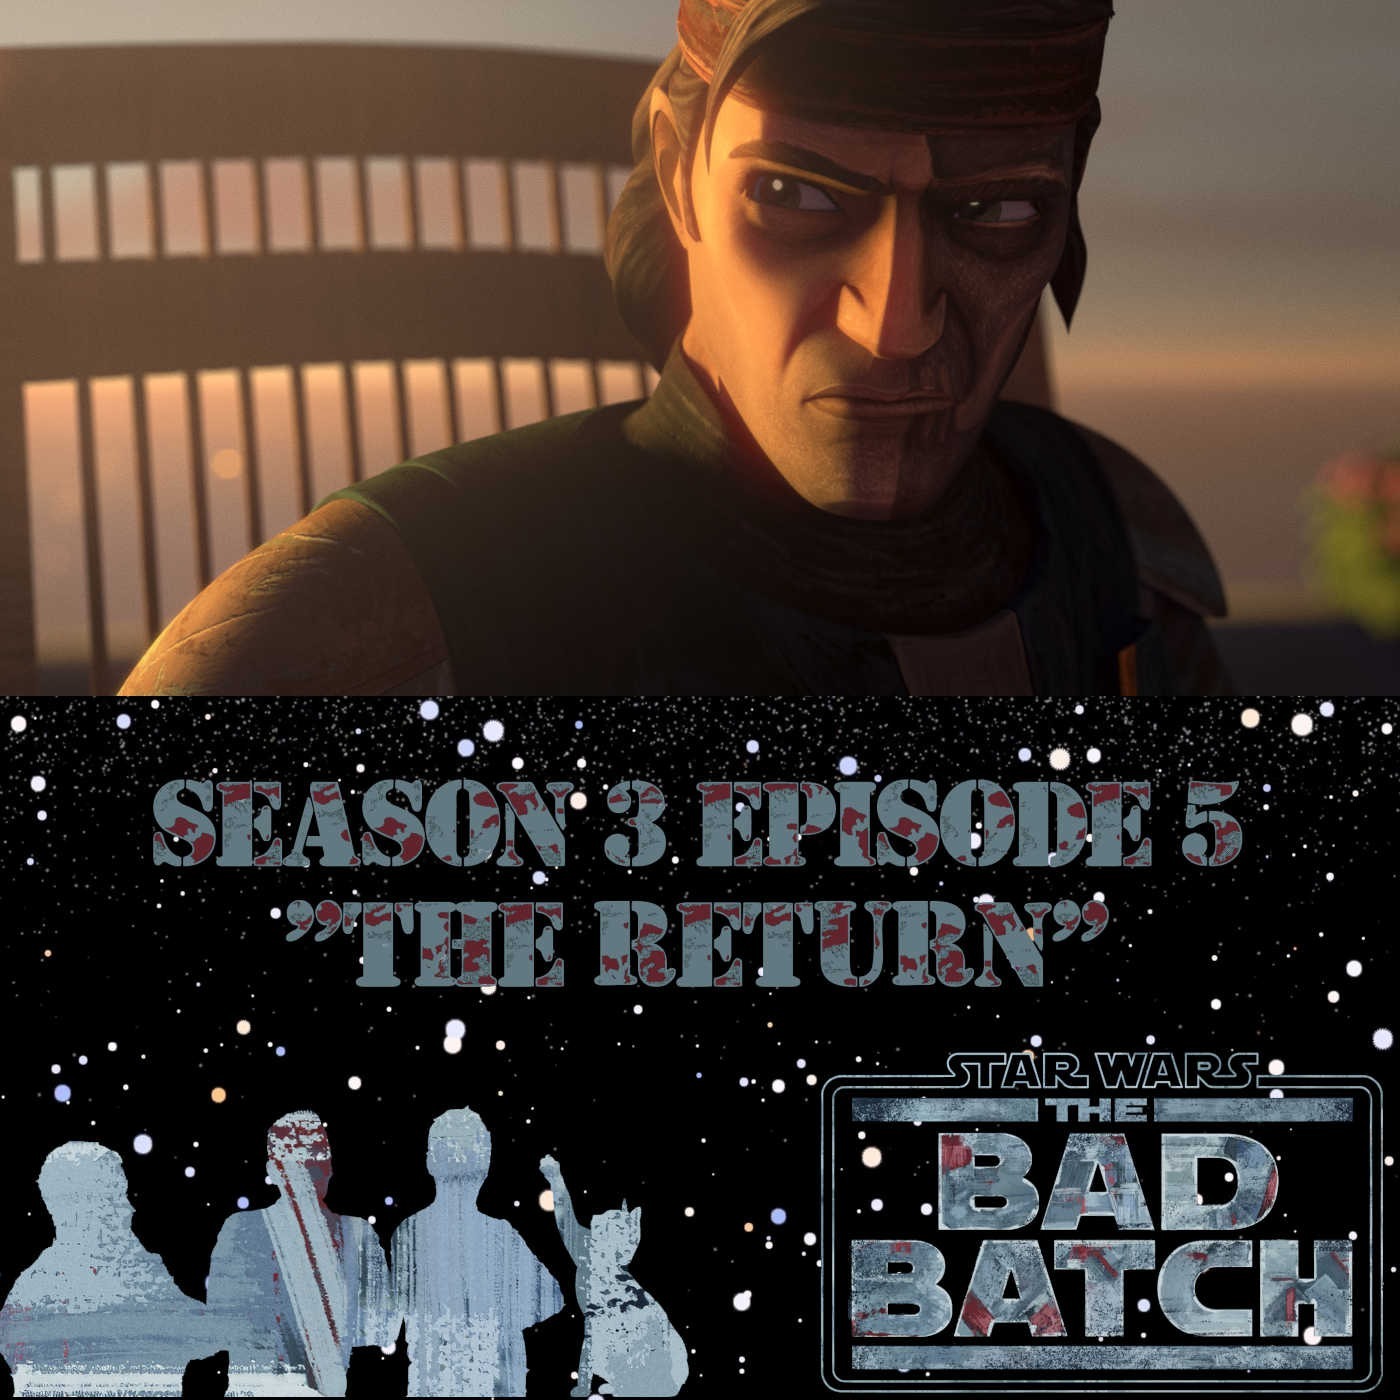 Star Wars The Bad Batch Batch 305 Podcast